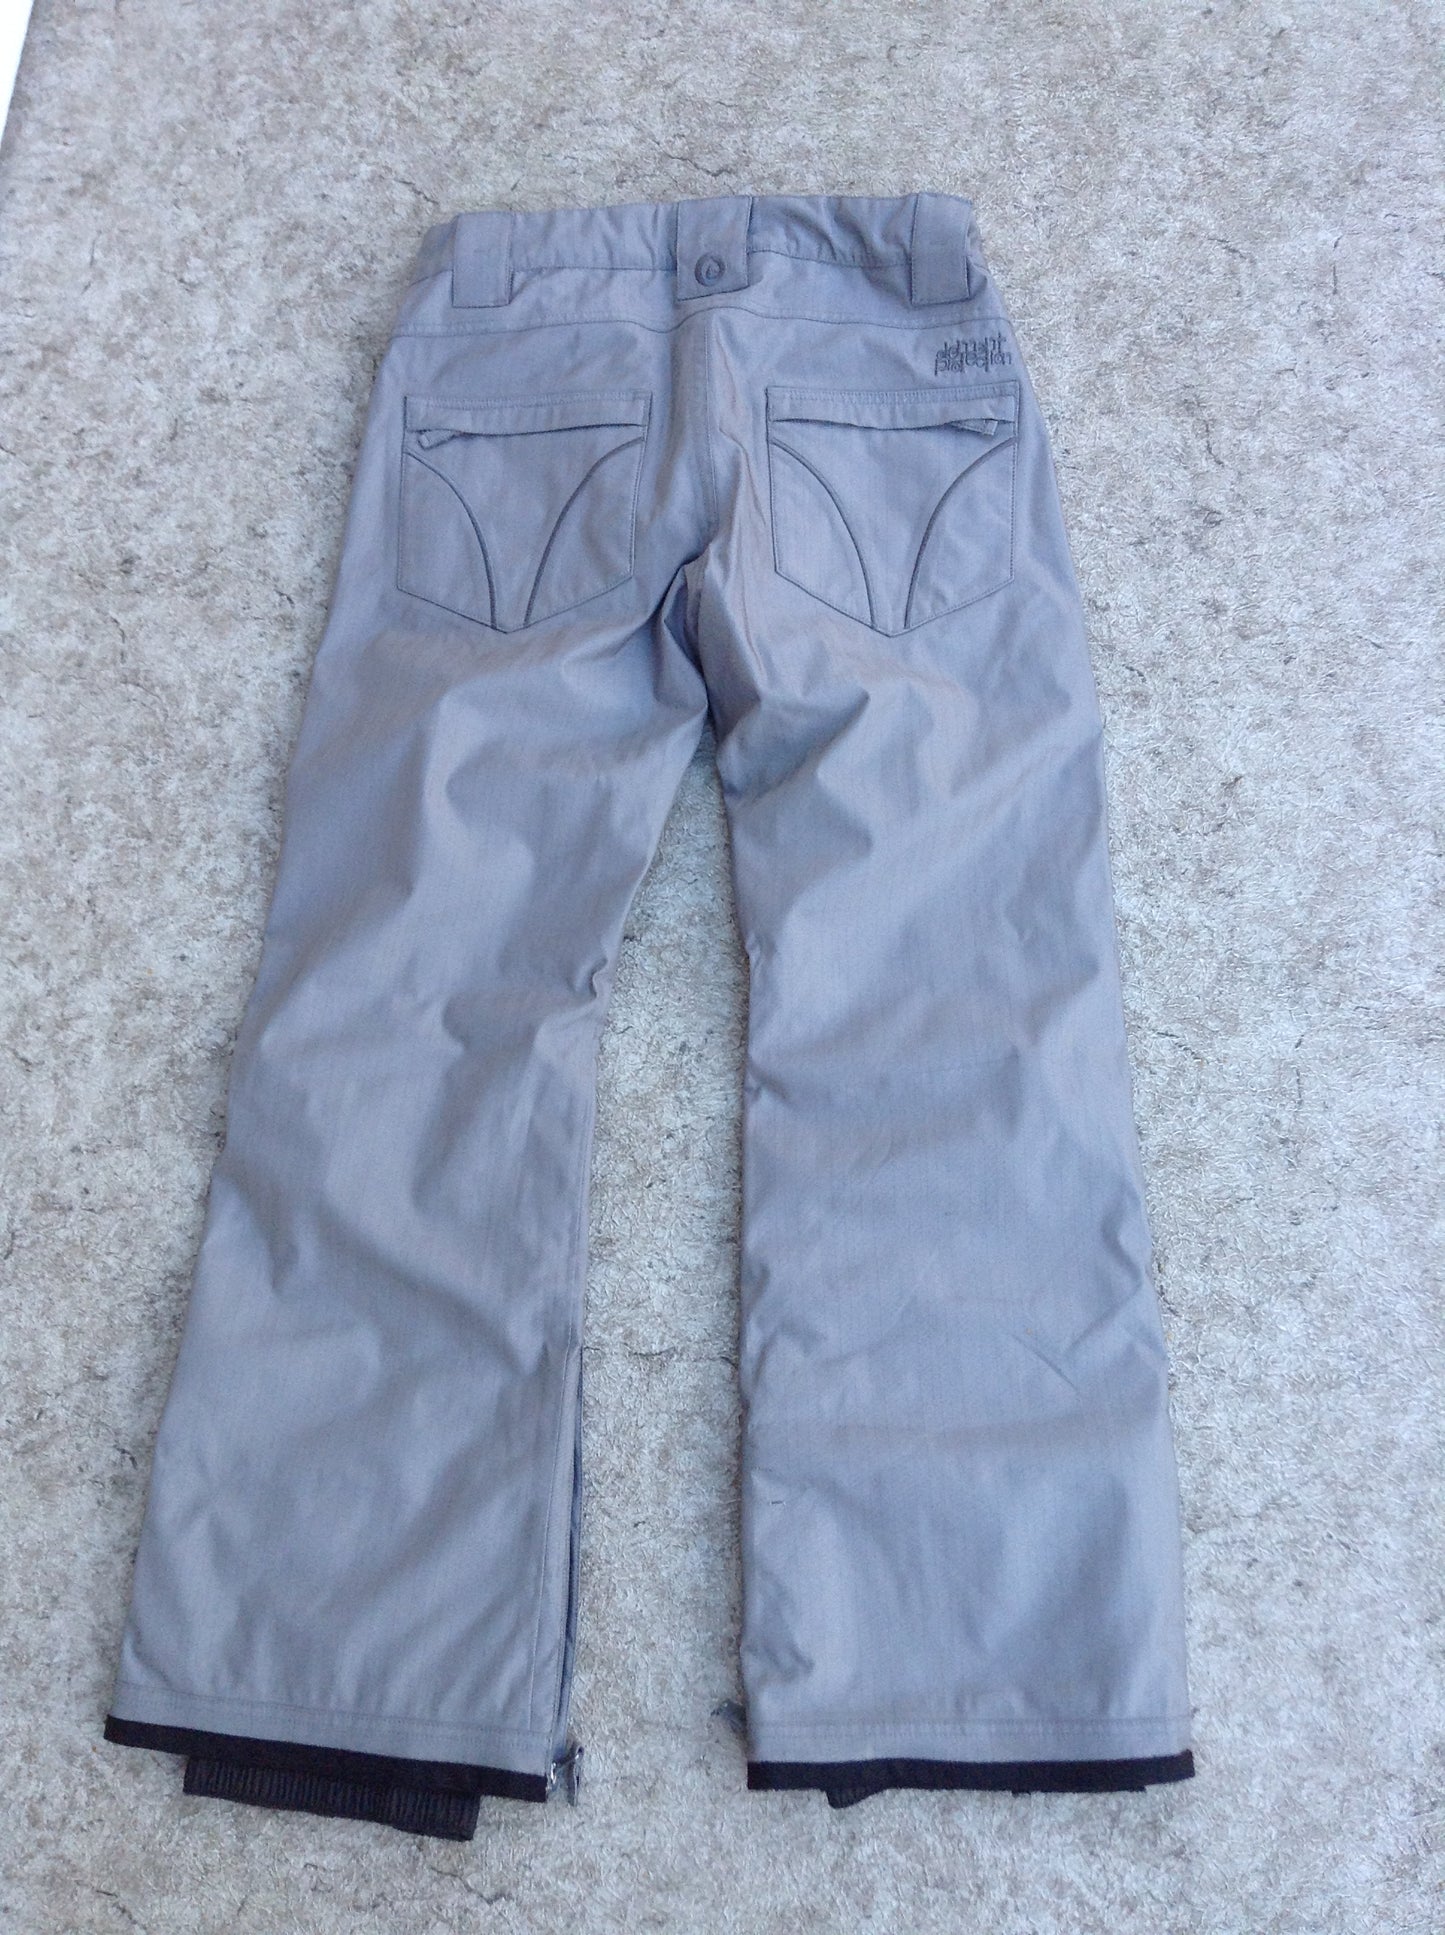 Snow Pants Men's Size Medium Arson Steel Grey Outstanding Quality Excellent